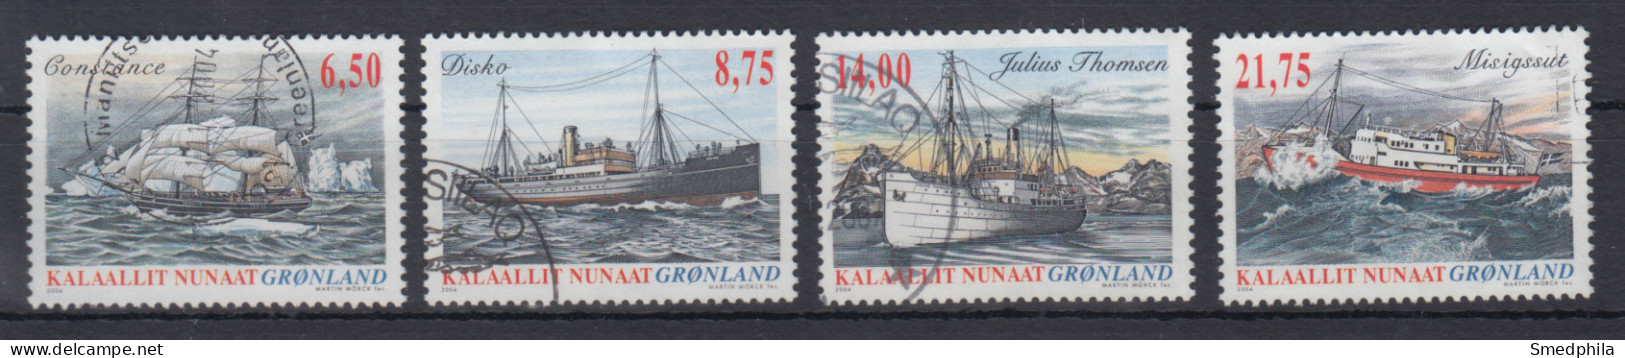 Greenland 2004 - Michel 423-426 Used - Usados